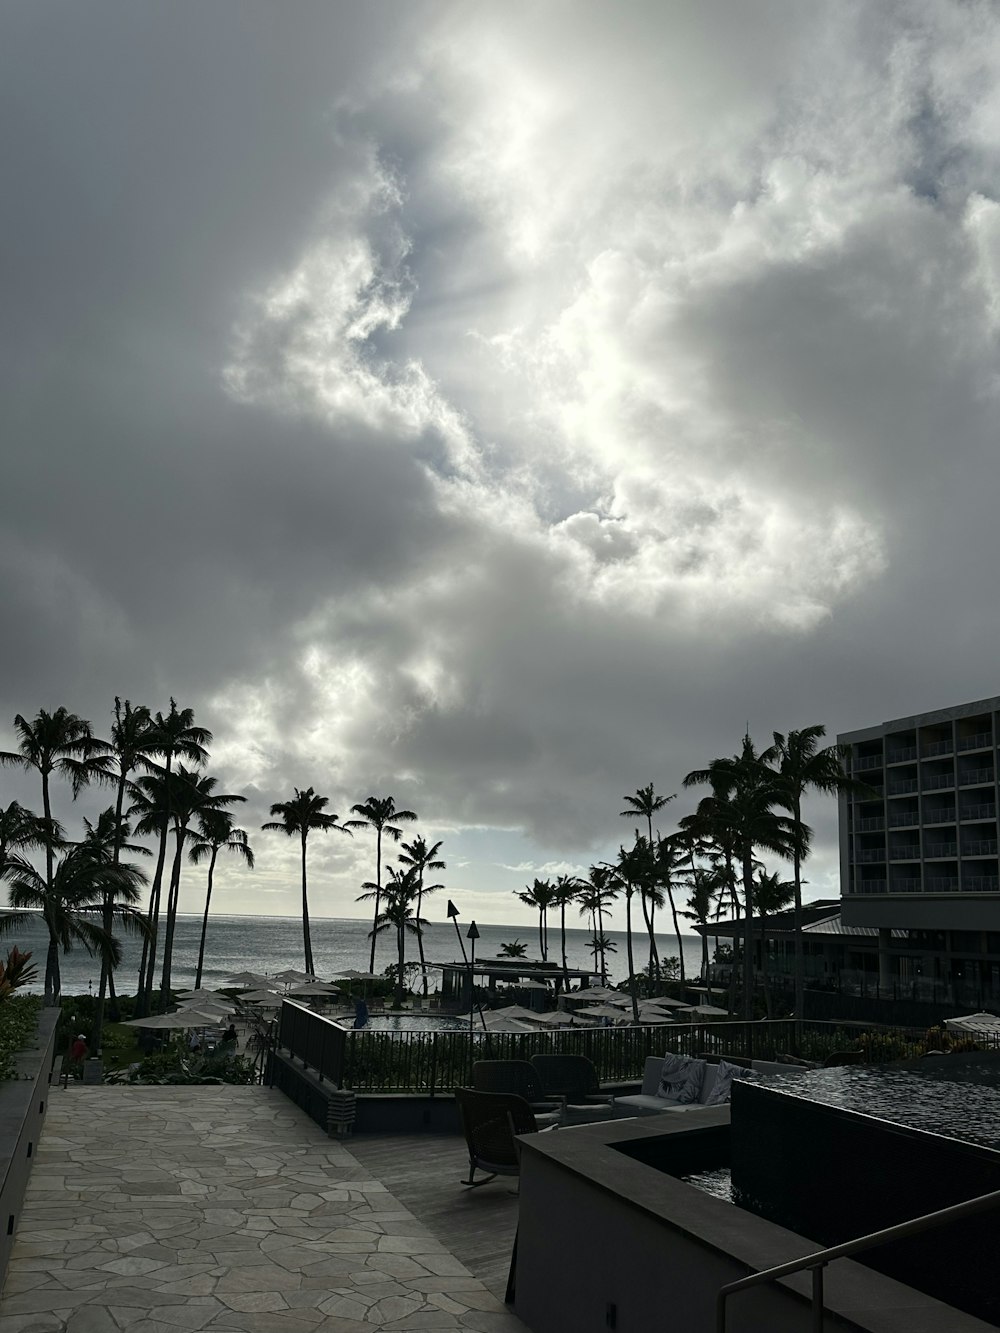 a cloudy sky over a beach with palm trees